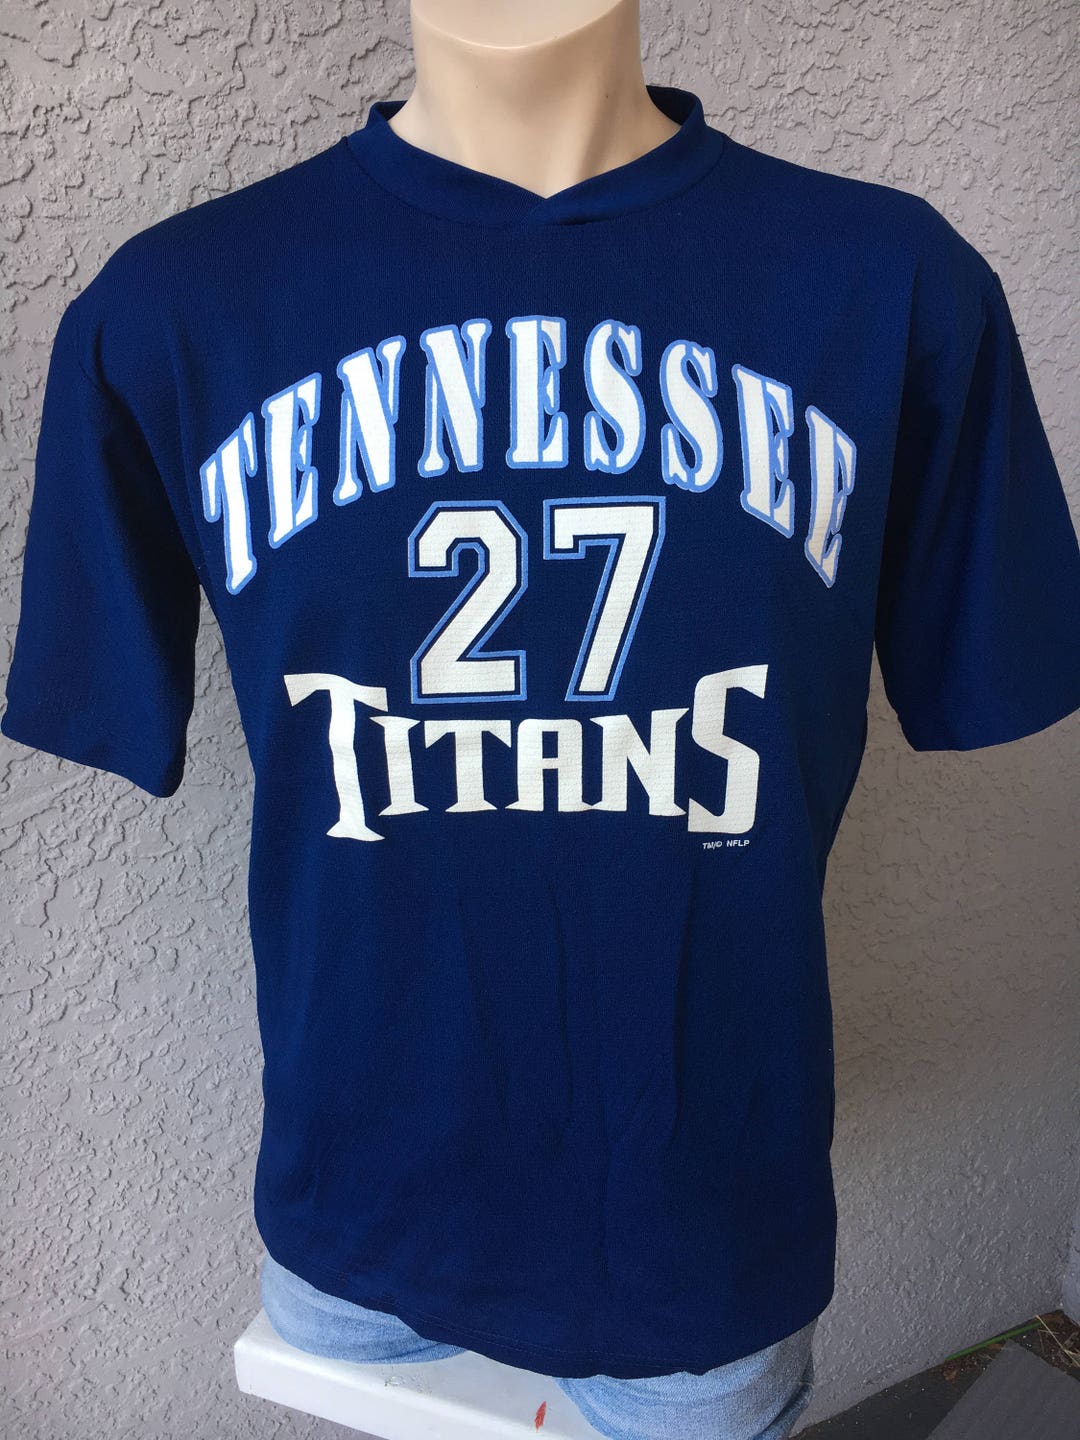 VINTAGE Logo Athletic Adult Mens XL Eddie George Tennessee Titans Jersey  T-Shirt